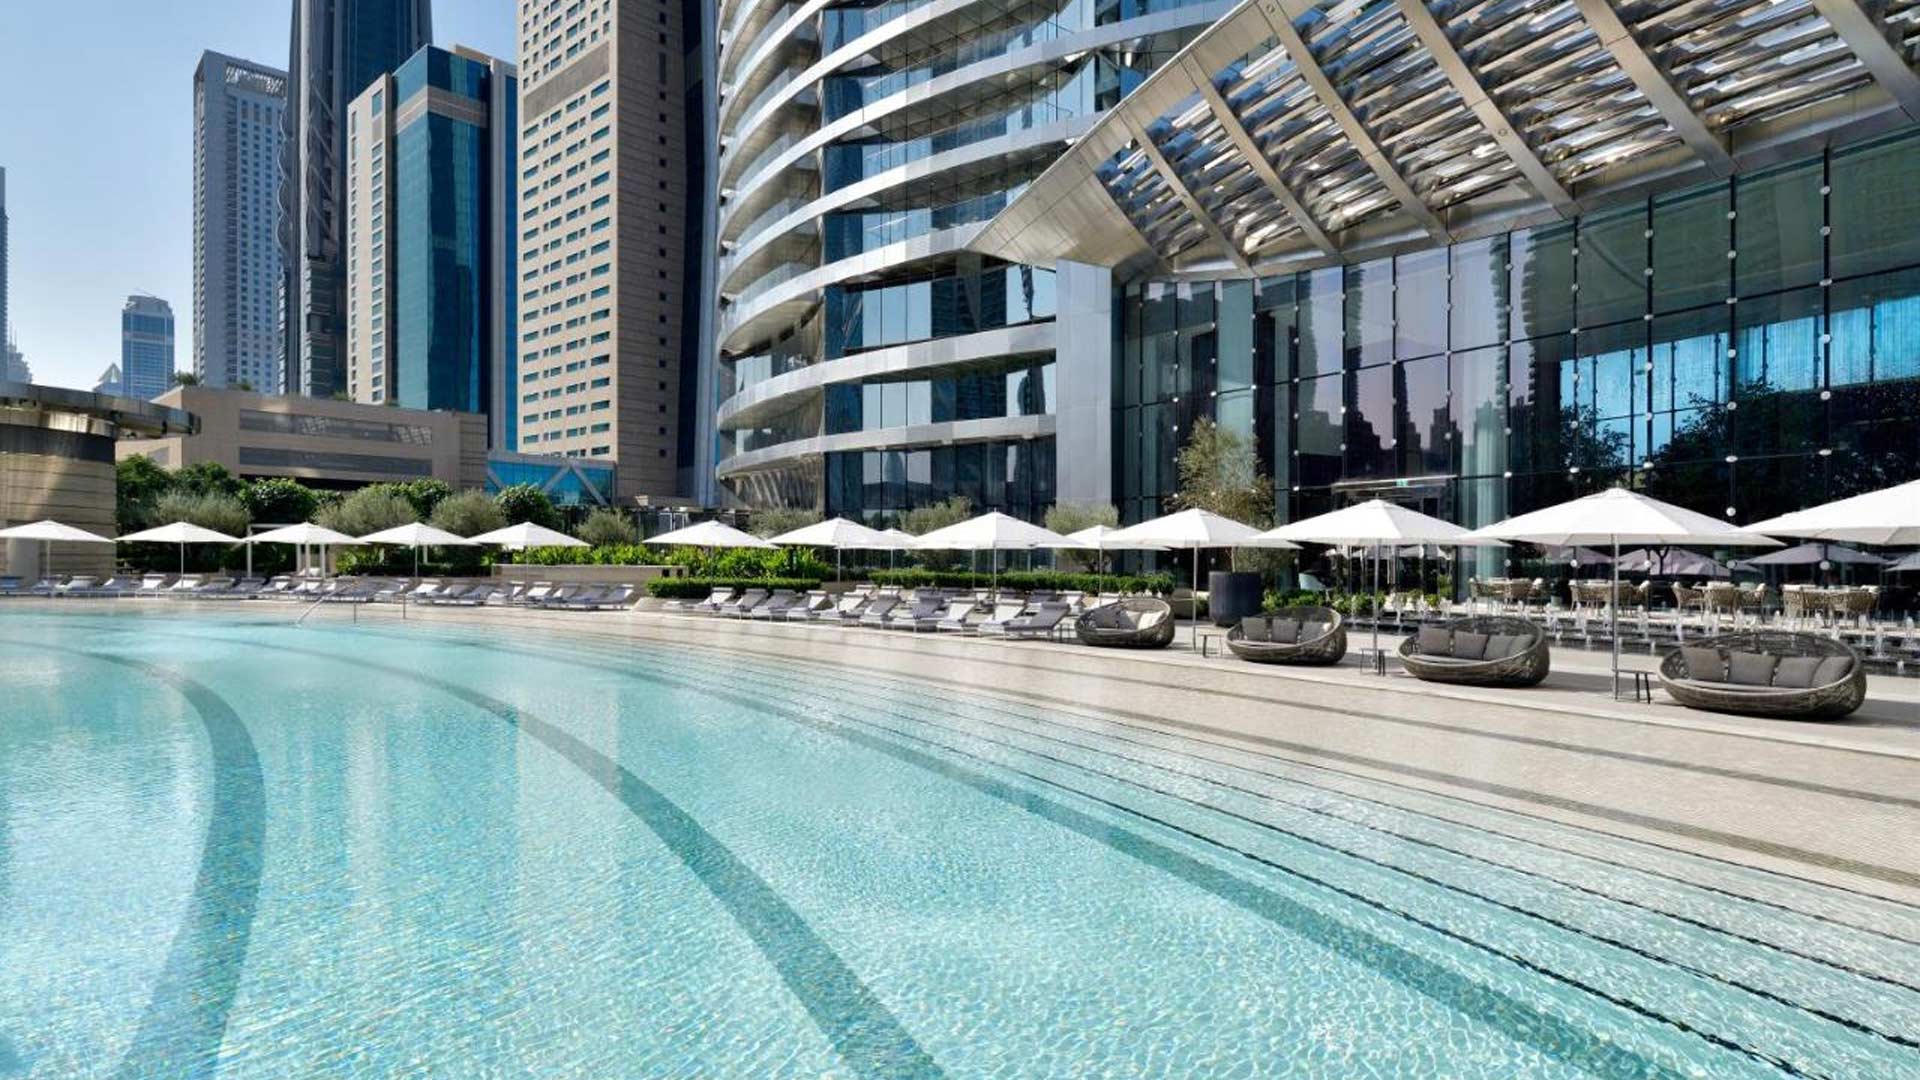 THE ADDRESS SKY VIEW TOWERS HOTEL APARTMENTS от Emaar Properties в Downtown Dubai, Dubai, ОАЭ2